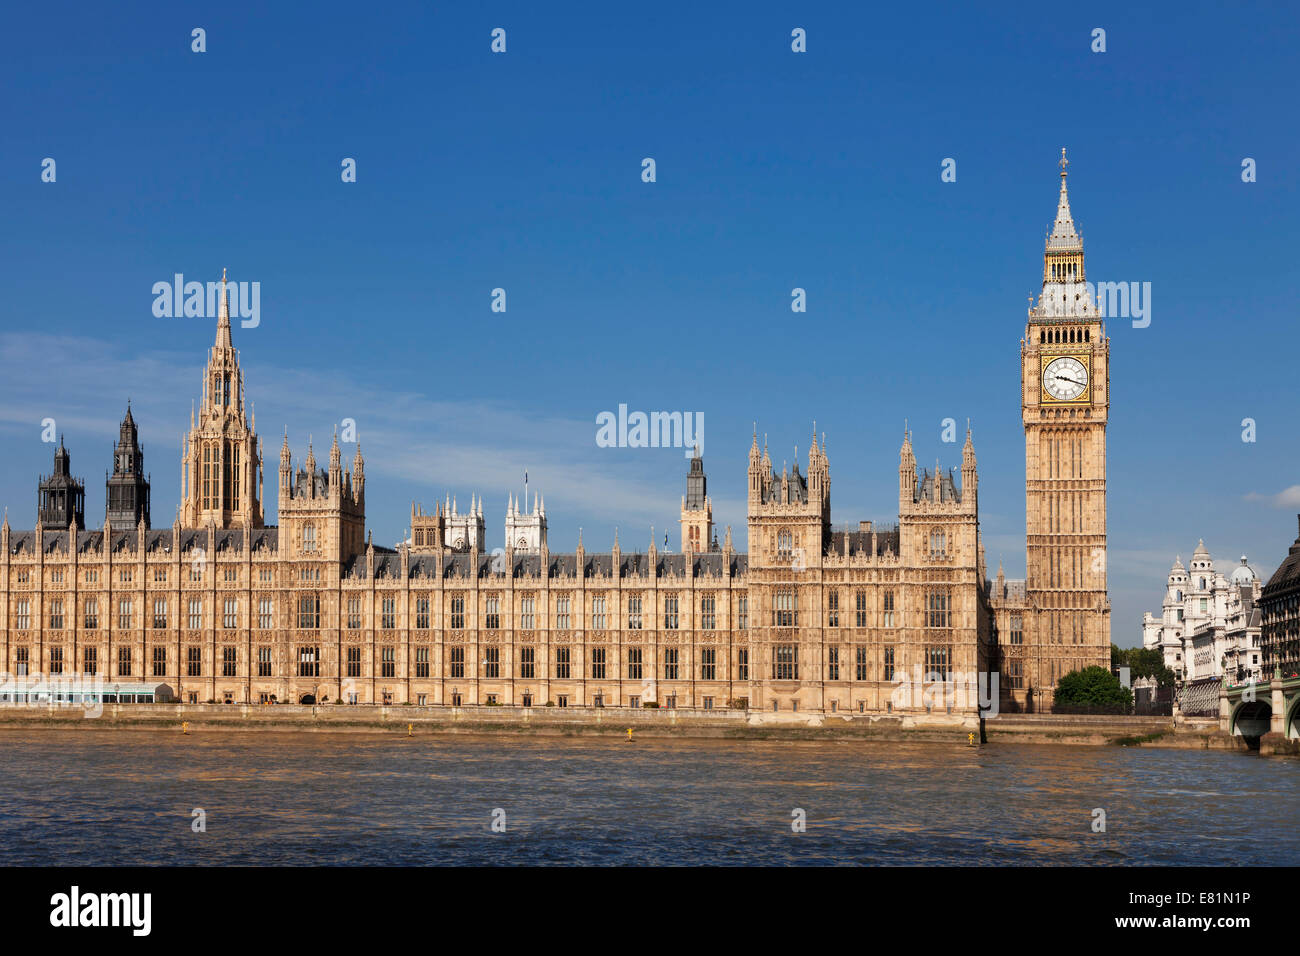 Houses of Parliament, Big Ben, River Thames, Westminster Bridge, Thames, London, England, United Kingdom Stock Photo